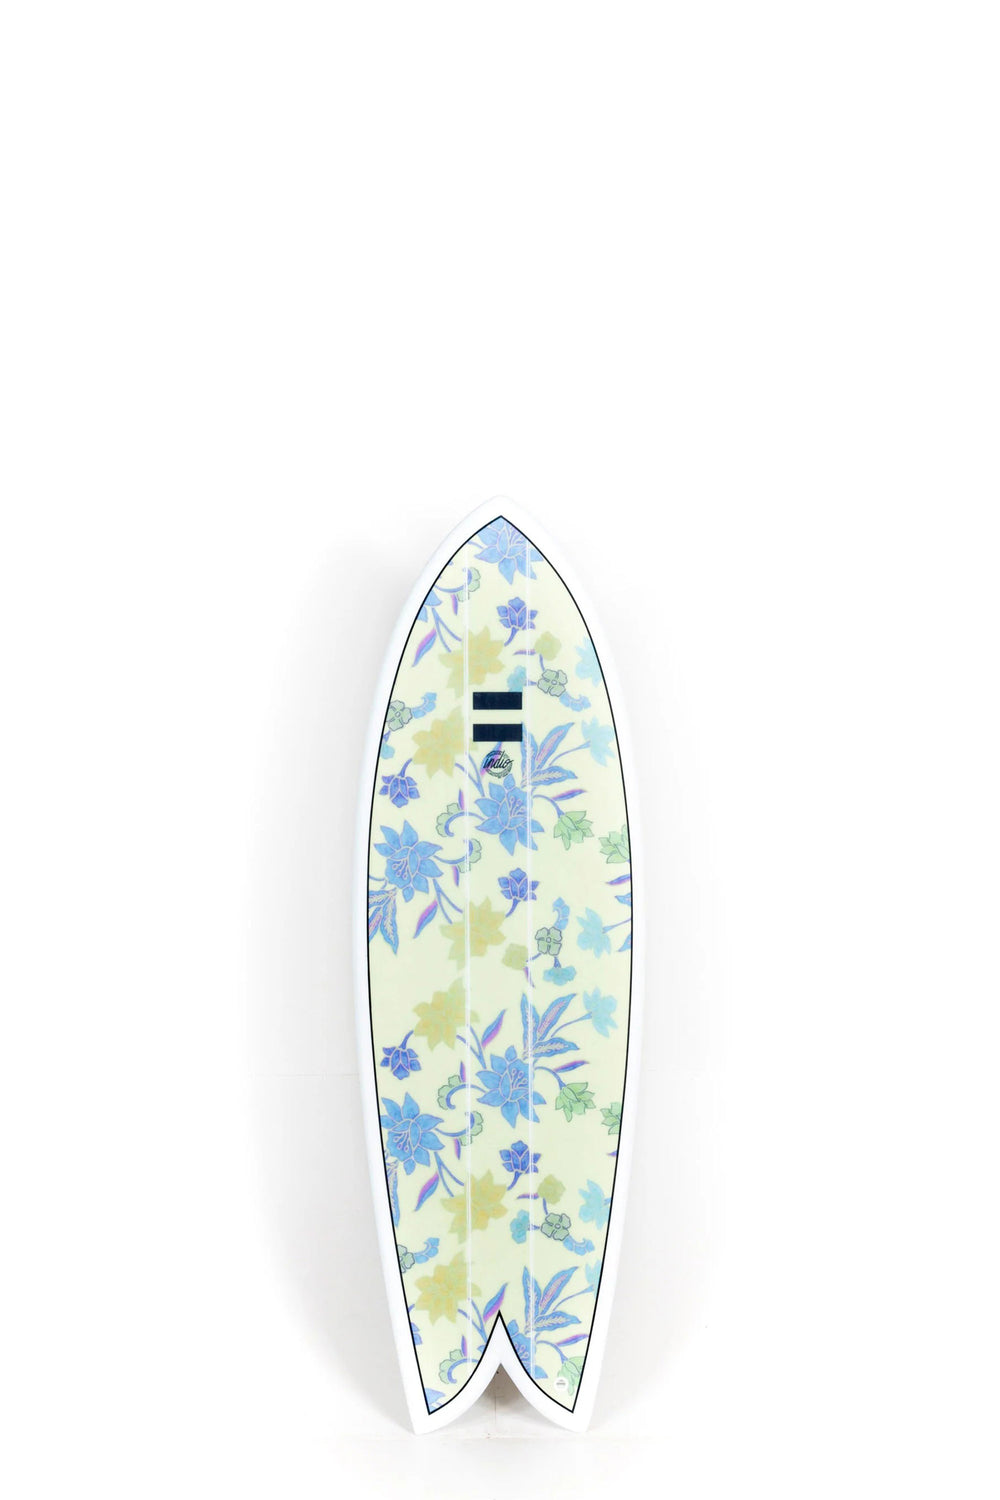 Indio Surfboards - DAB Flowers - 5’9” x 21 1/8 x 2 6/16 x 37.6L.